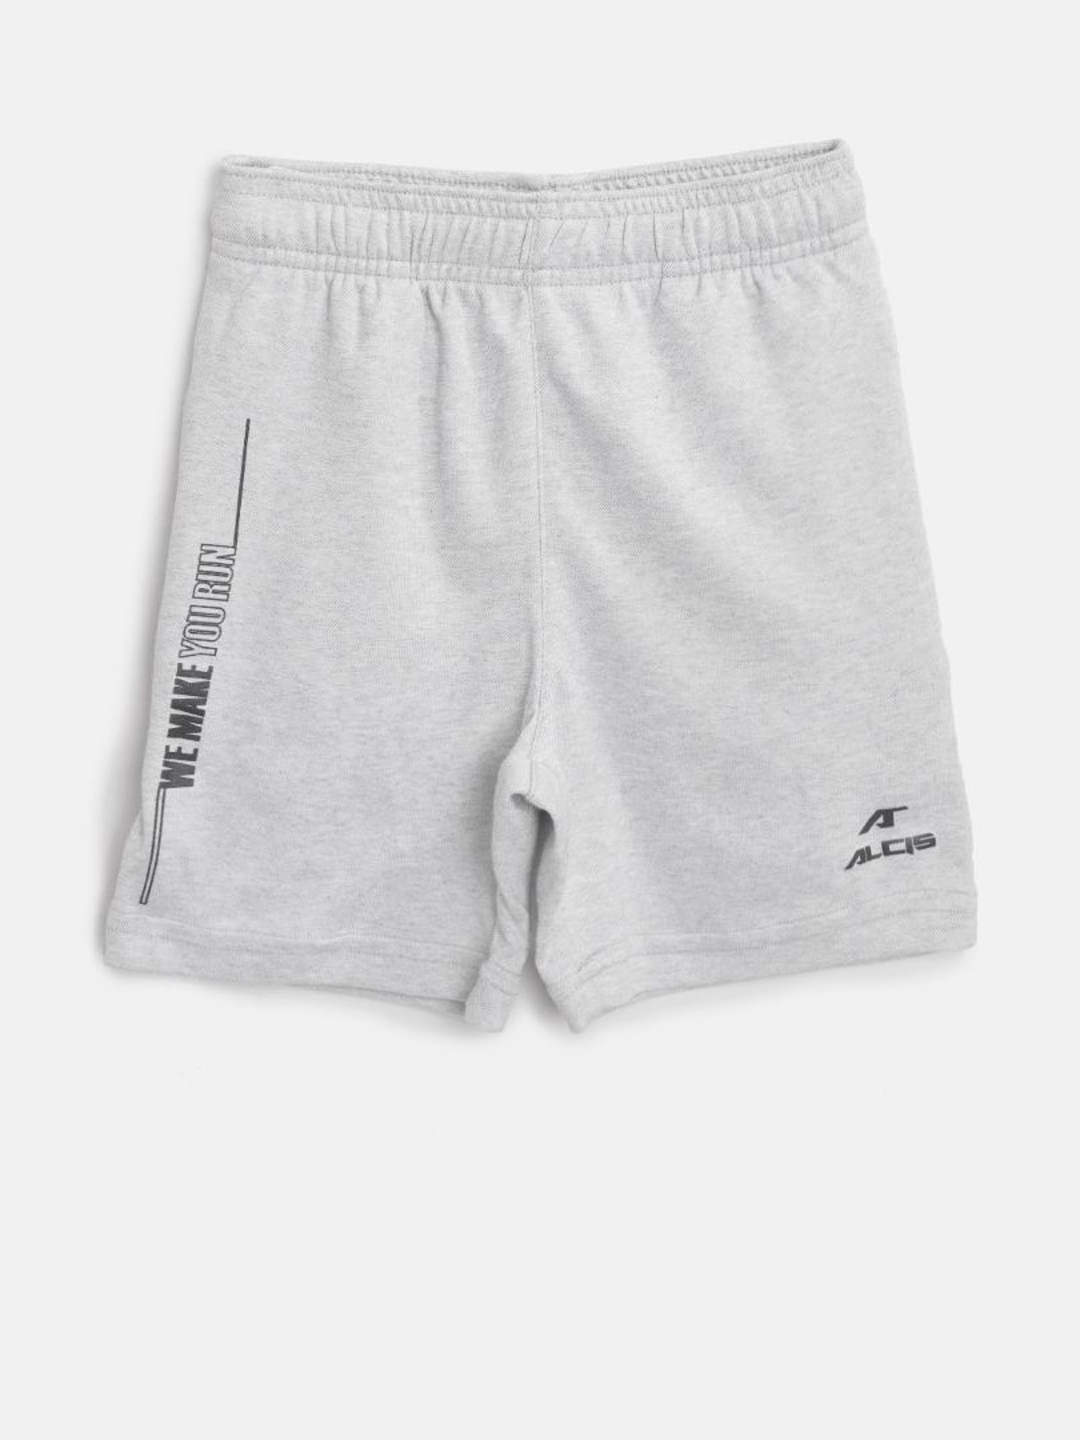 Alcis Boys Grey Melange Solid Slim Fit Running Sports Shorts BKS6181-4